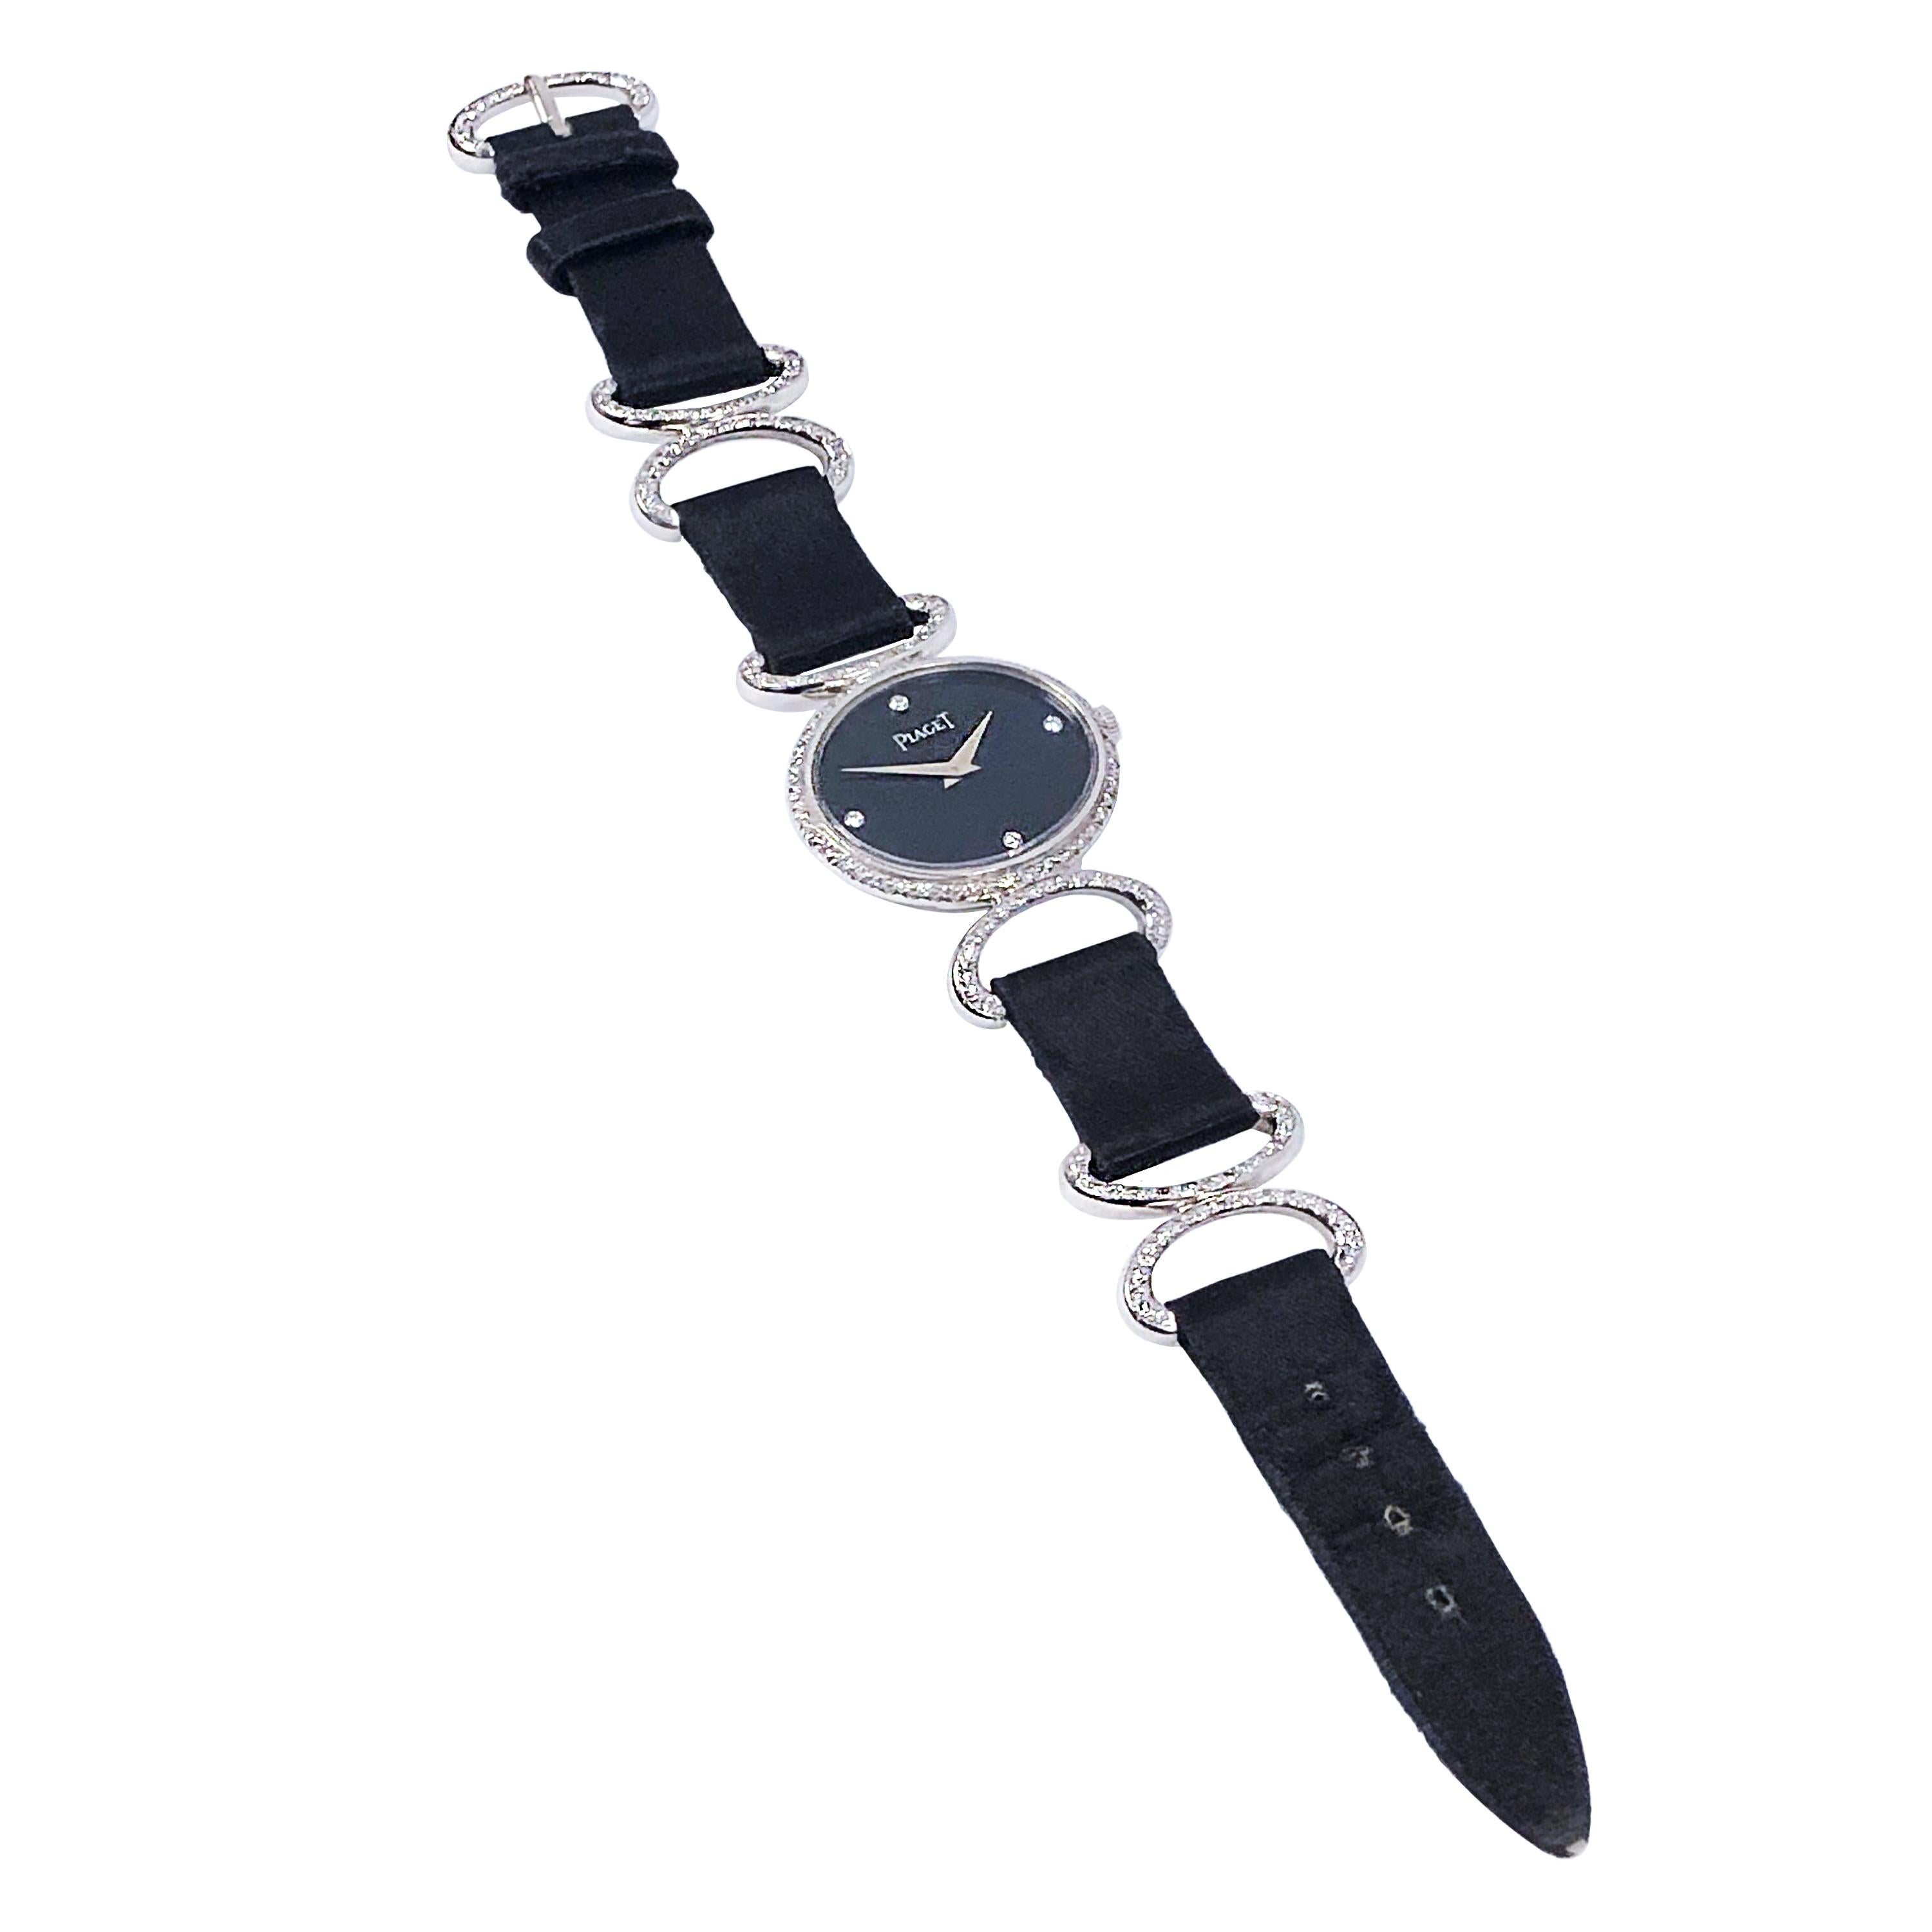 Women's Piaget Ladies White Gold and Diamond Wrist Watch